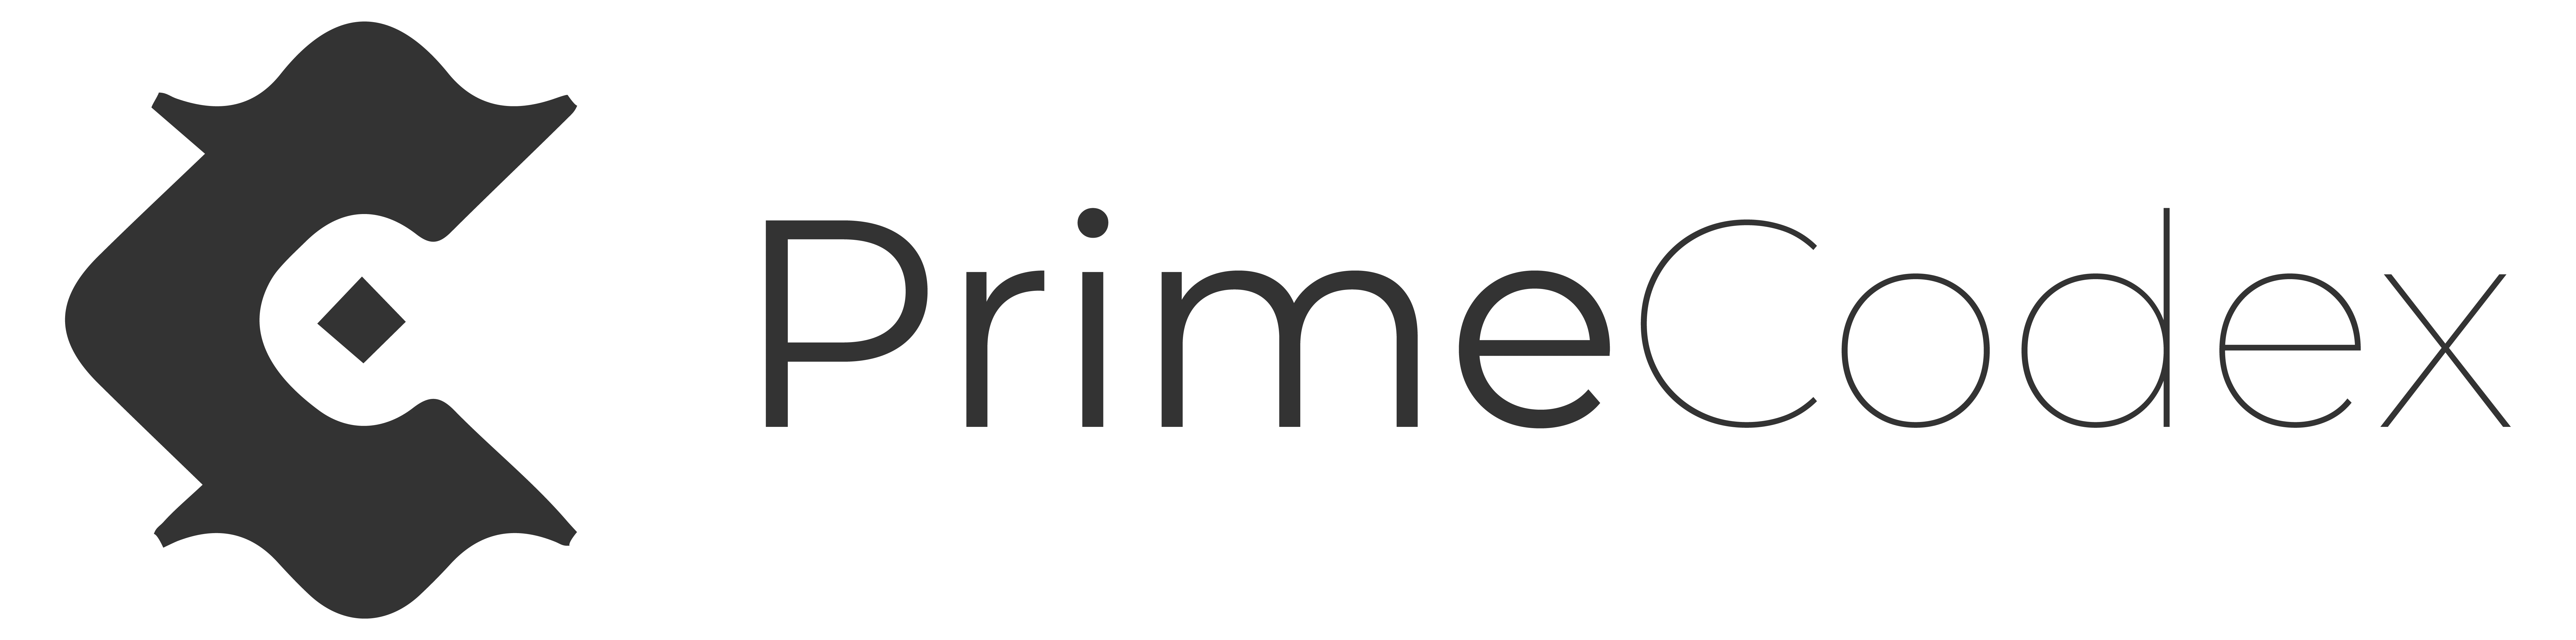 PrimeCodex-dark